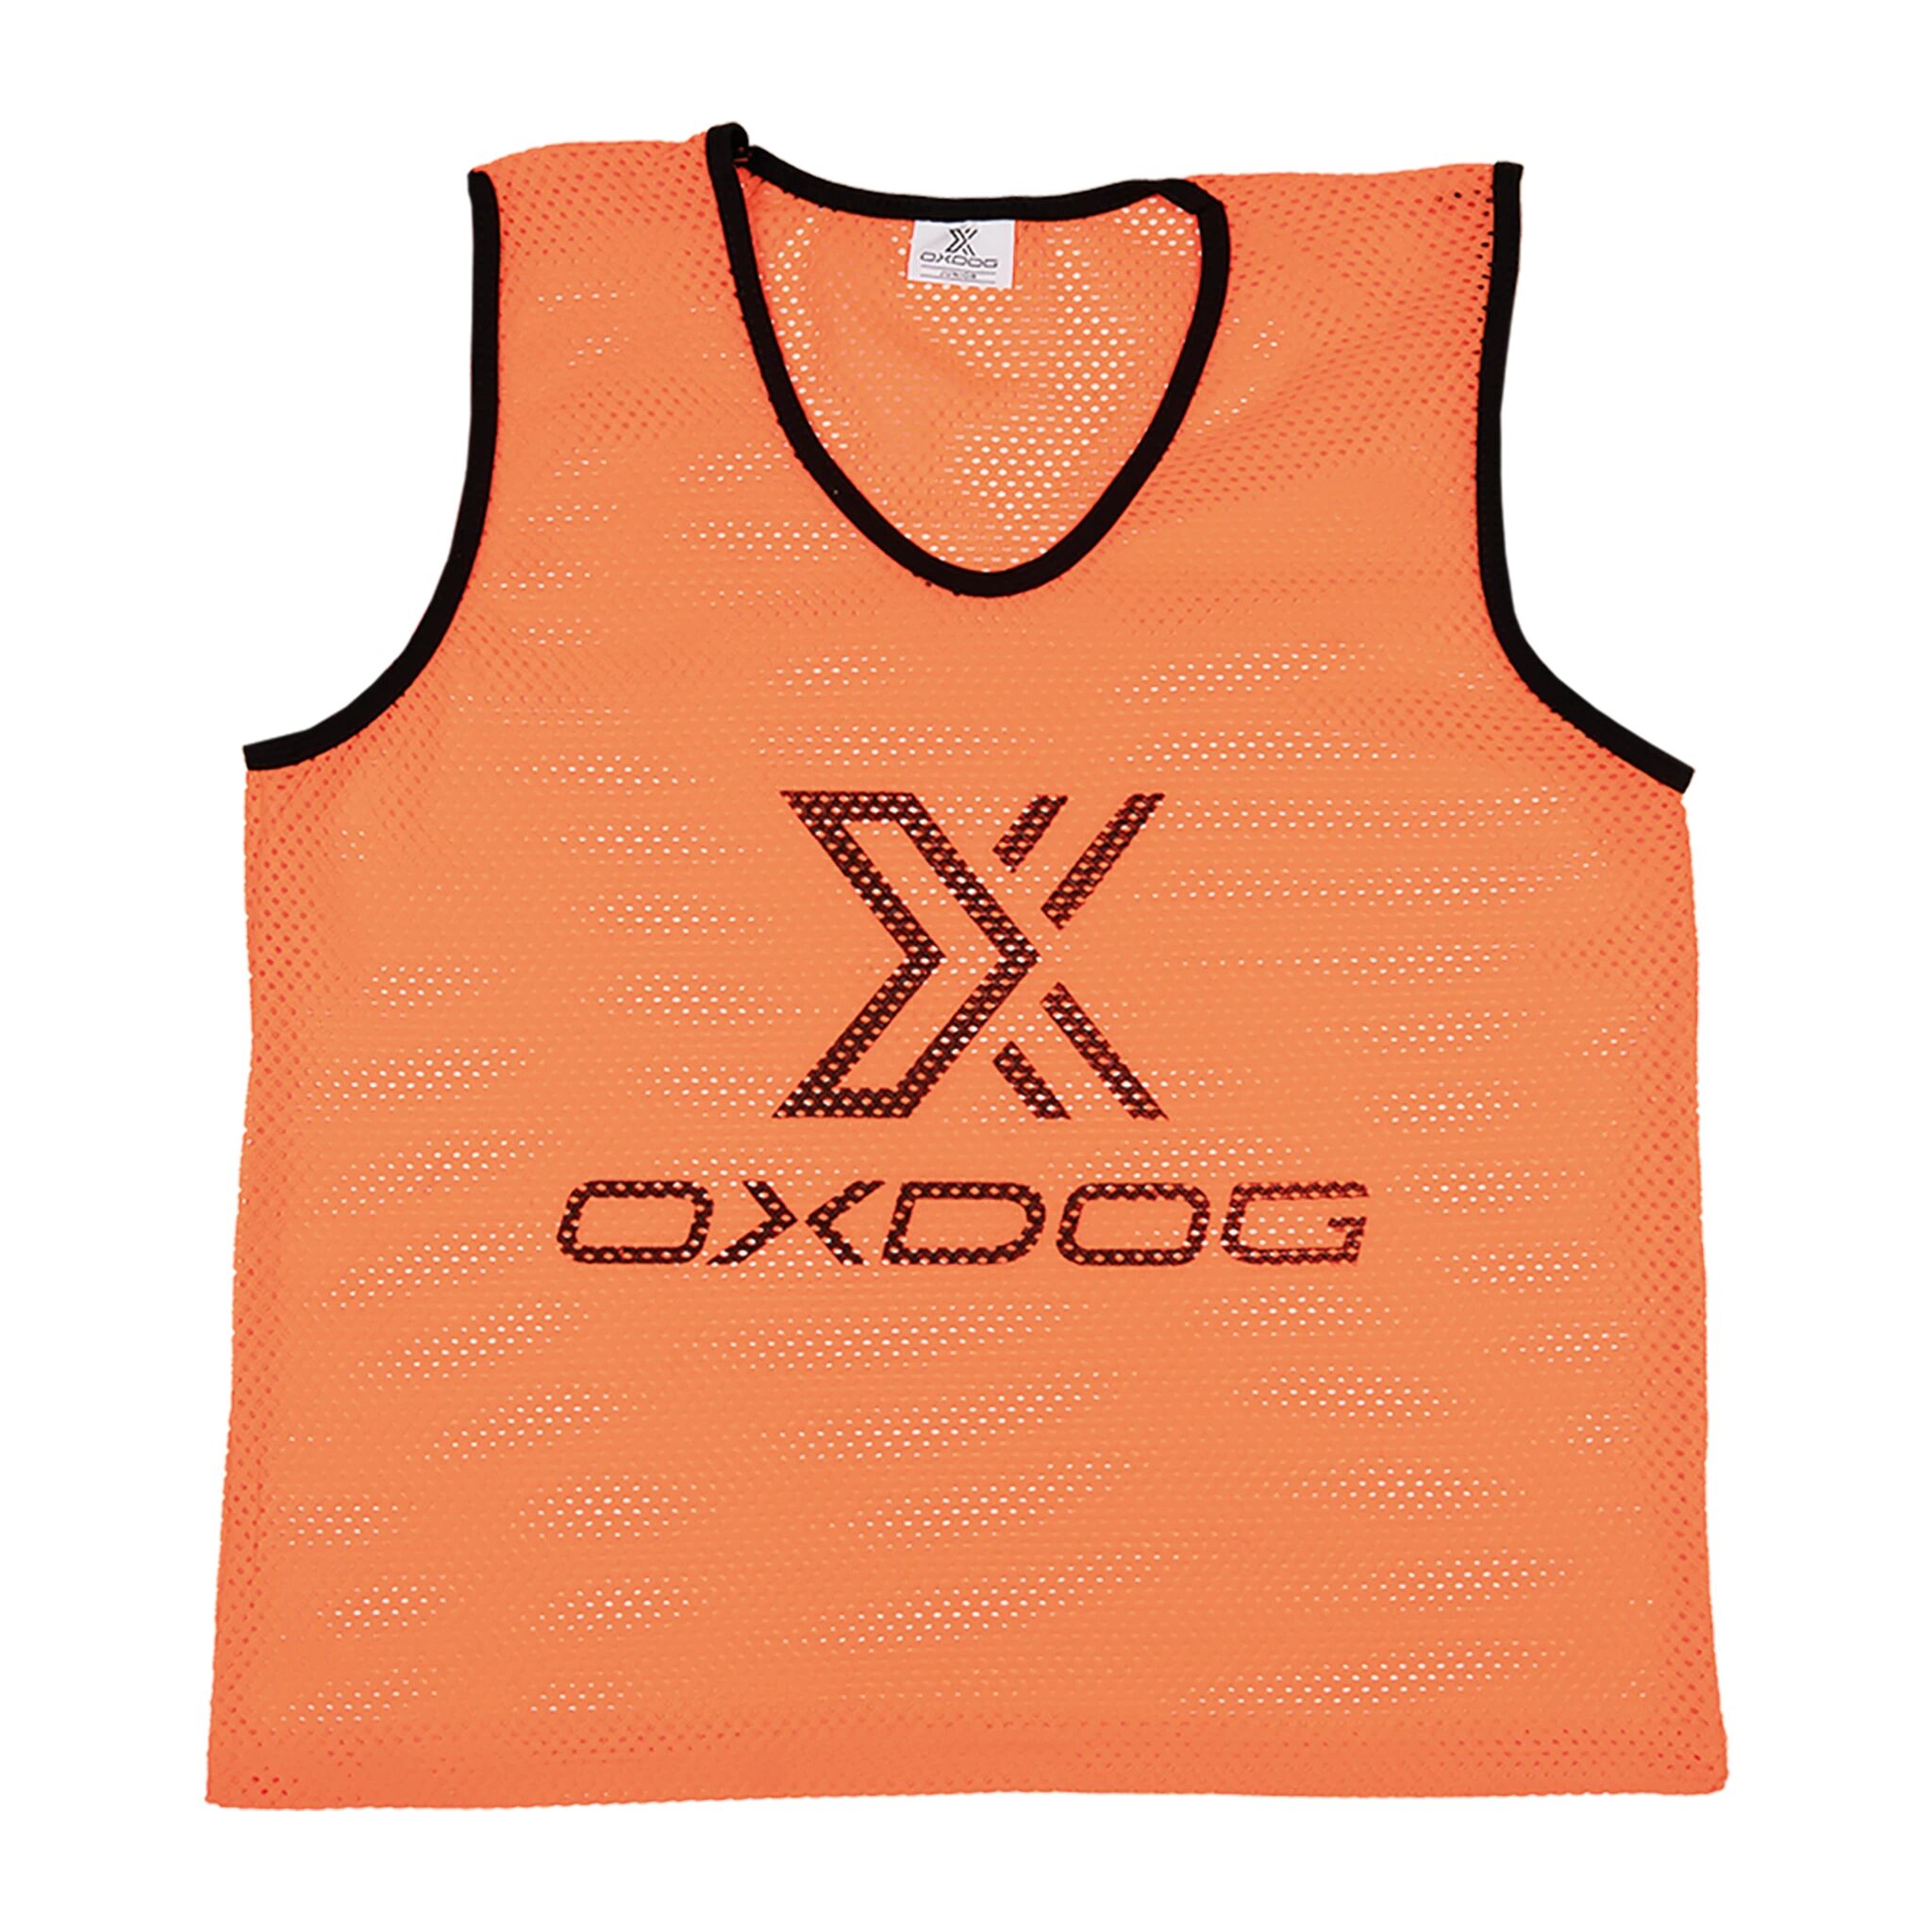 Oxdog 2021 OX1 Training vest SR 5pcs, treningsvester senior One Size Orange